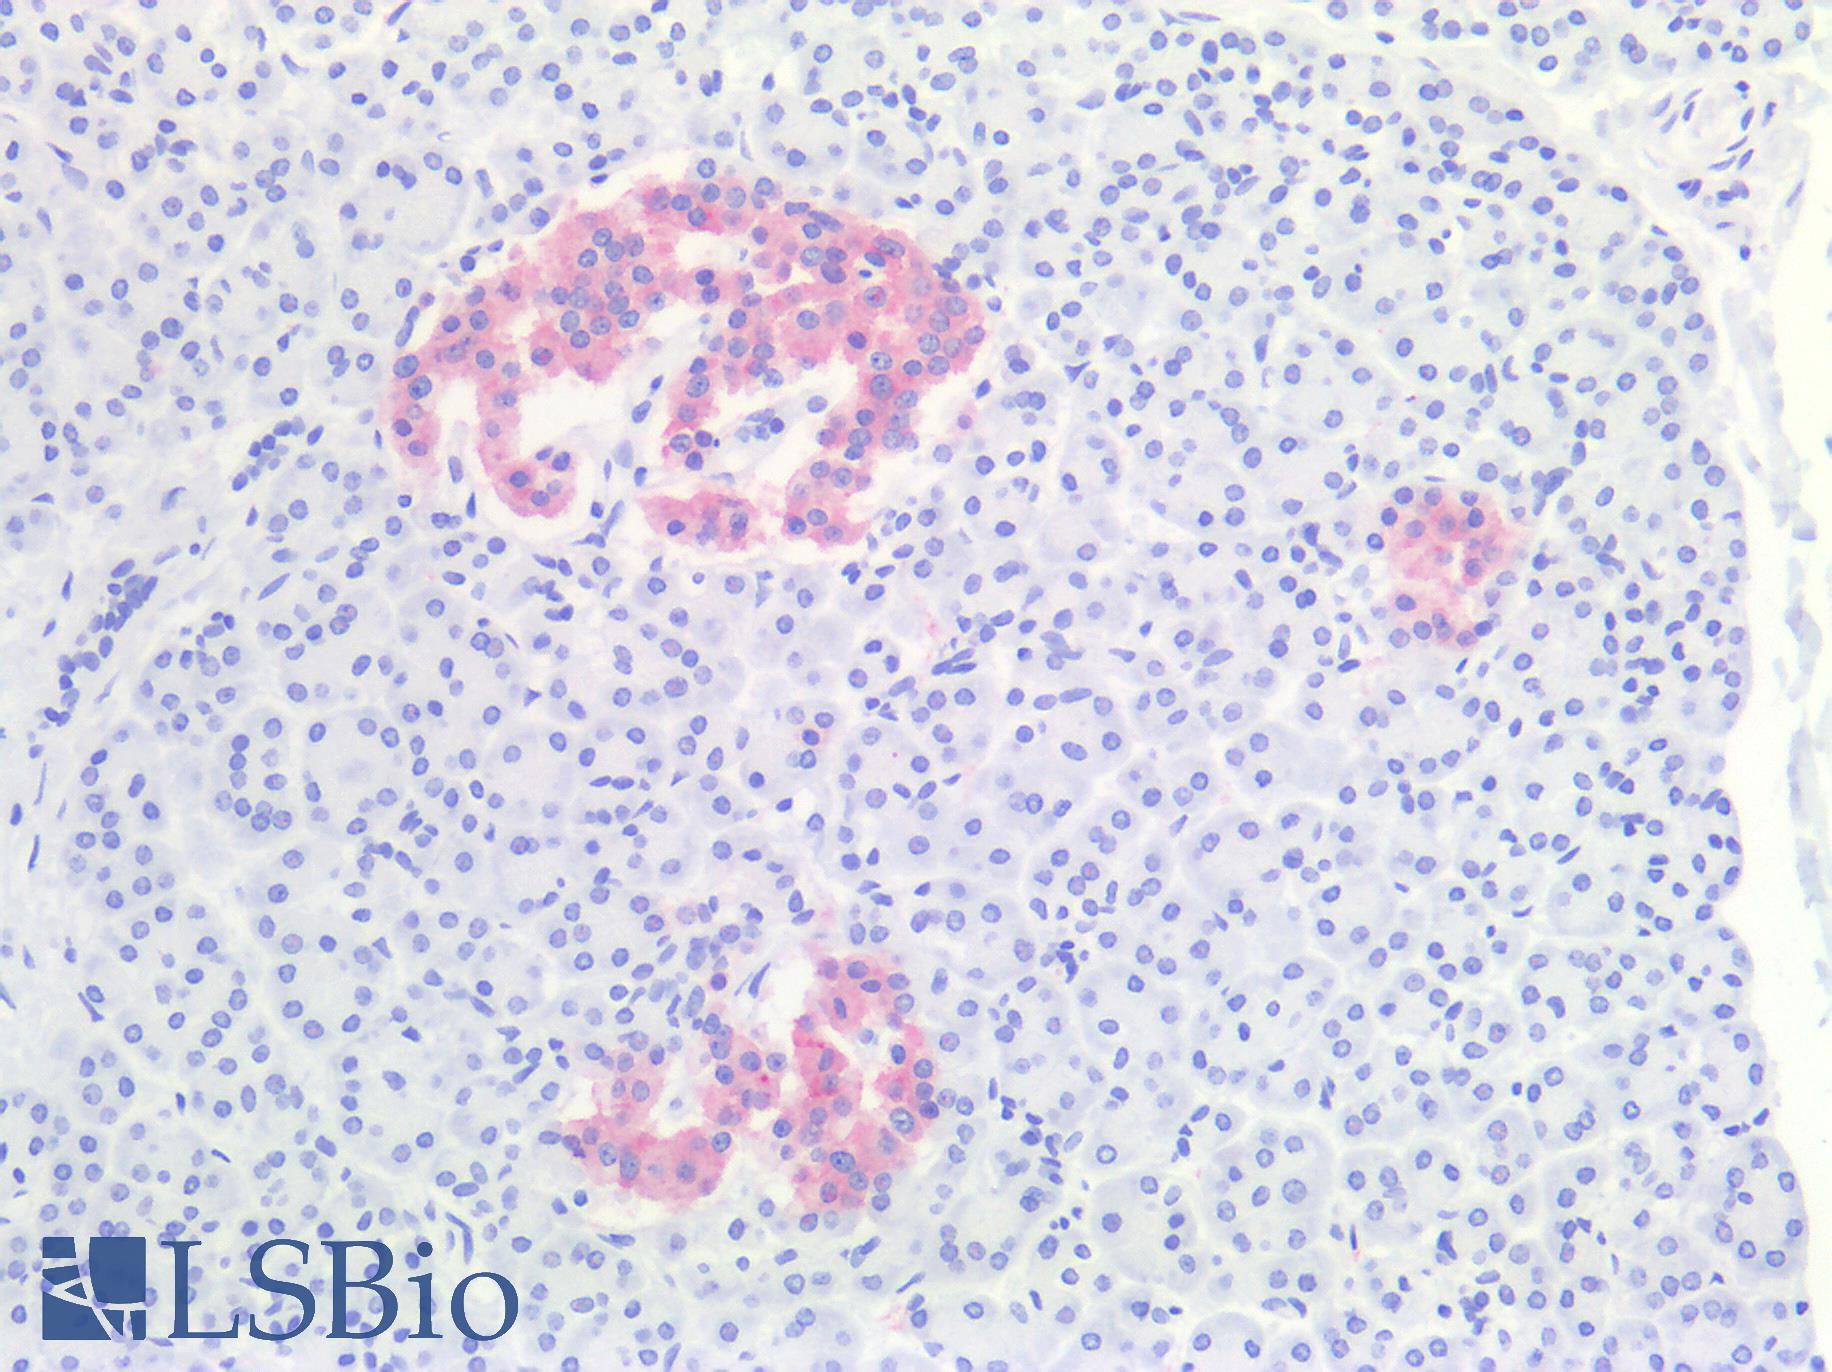 SYP / Synaptophysin Antibody - Human Pancreas: Formalin-Fixed, Paraffin-Embedded (FFPE)